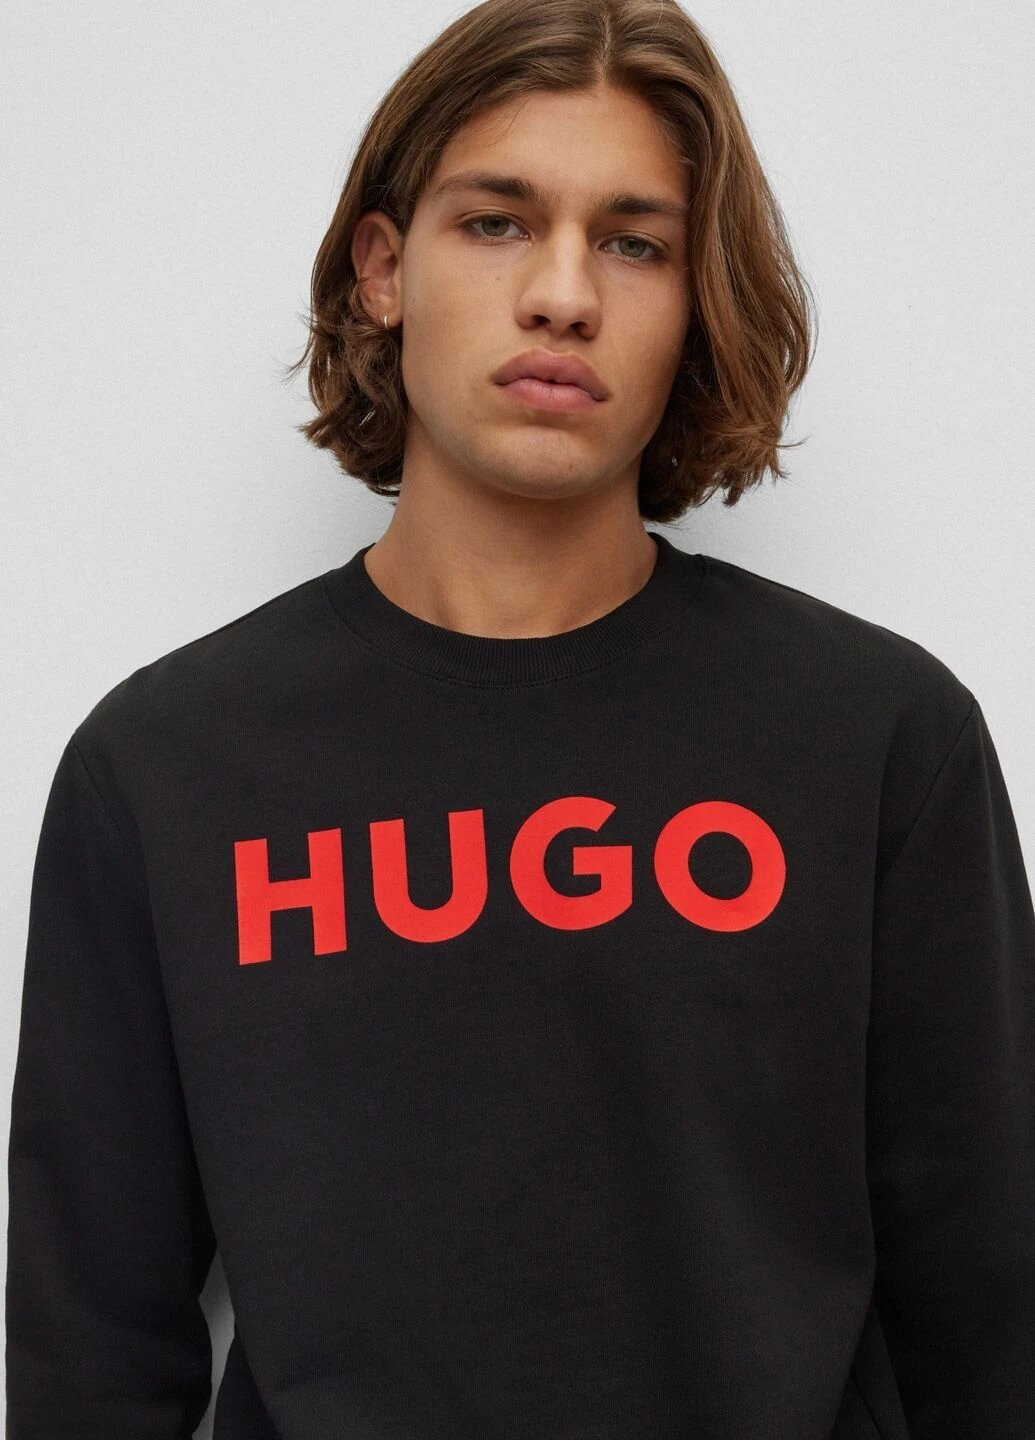 Чоловічий спортивний костюм Hugo Boss hugo (262809857)